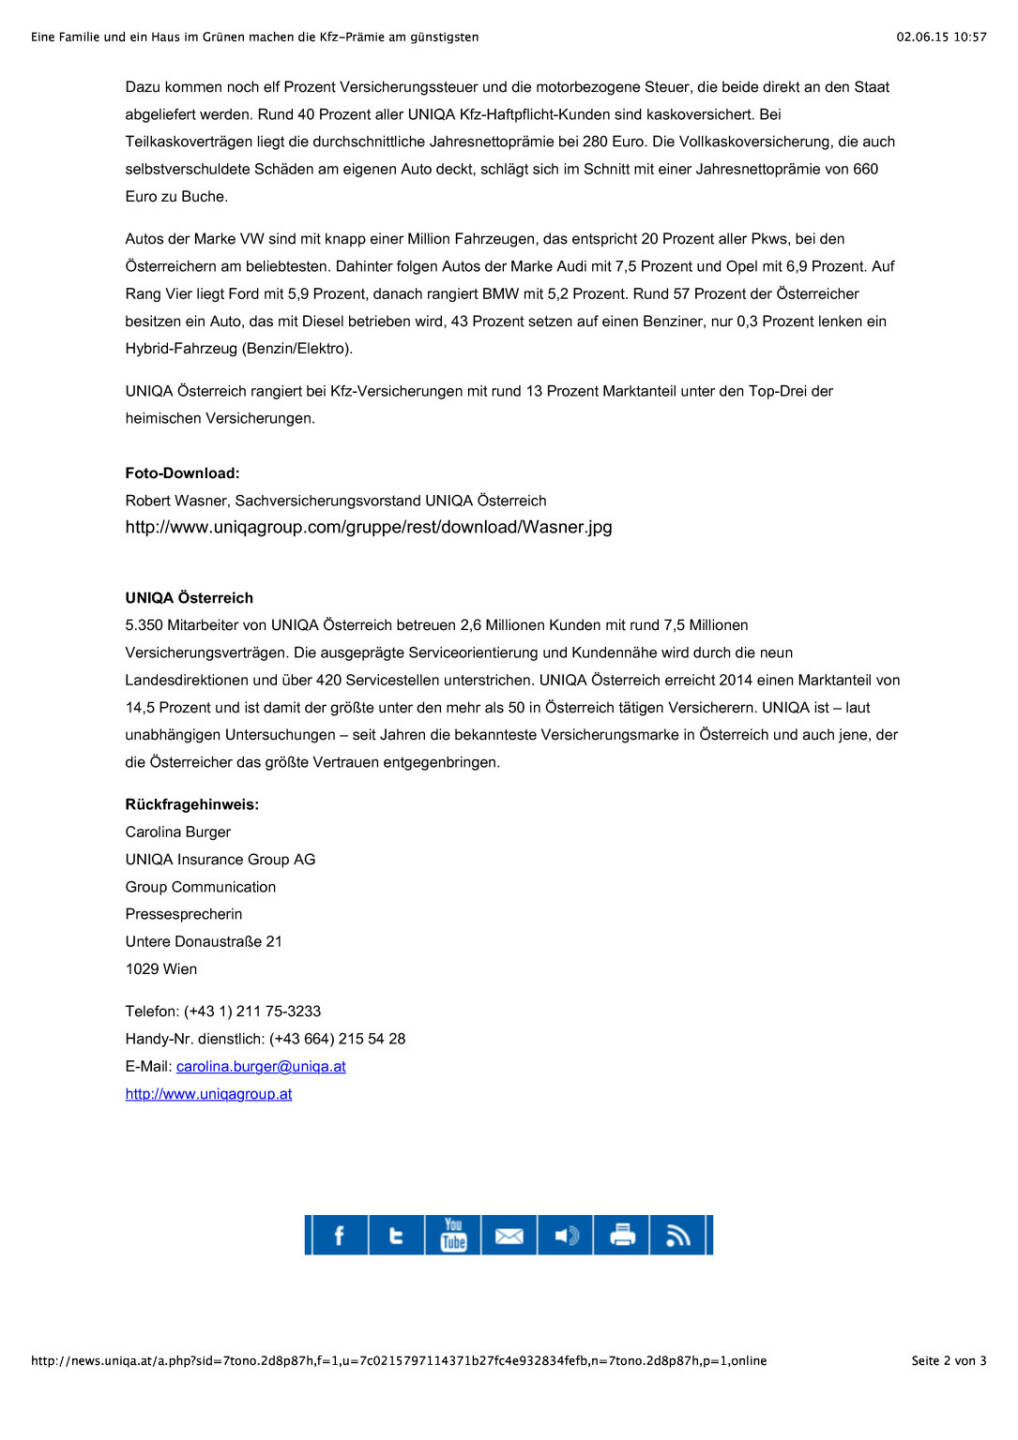 Uniqa: Zusammenhang Familie, Haus im Grünen und Kfz-Prämie , Seite 2/3, komplettes Dokument unter http://boerse-social.com/static/uploads/file_64_uniqa_kfz.pdf